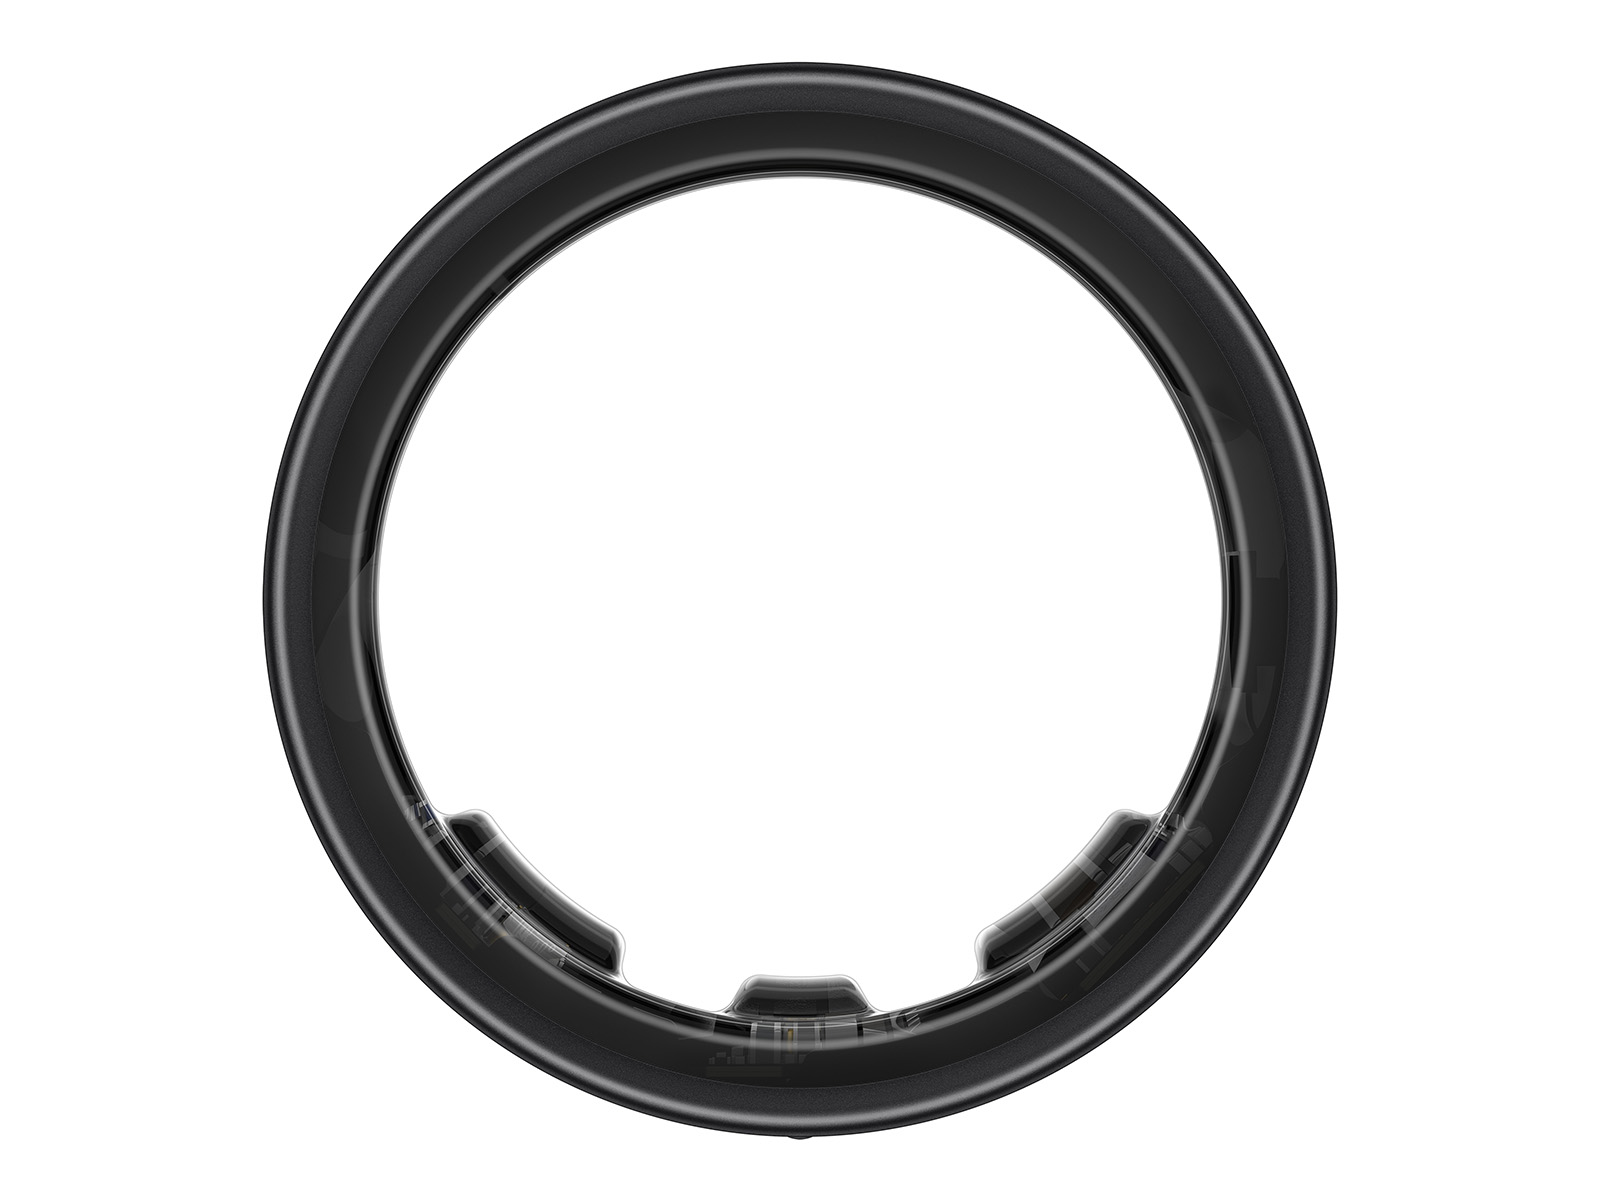 Thumbnail image of Galaxy Ring, Size 10, Titanium Black